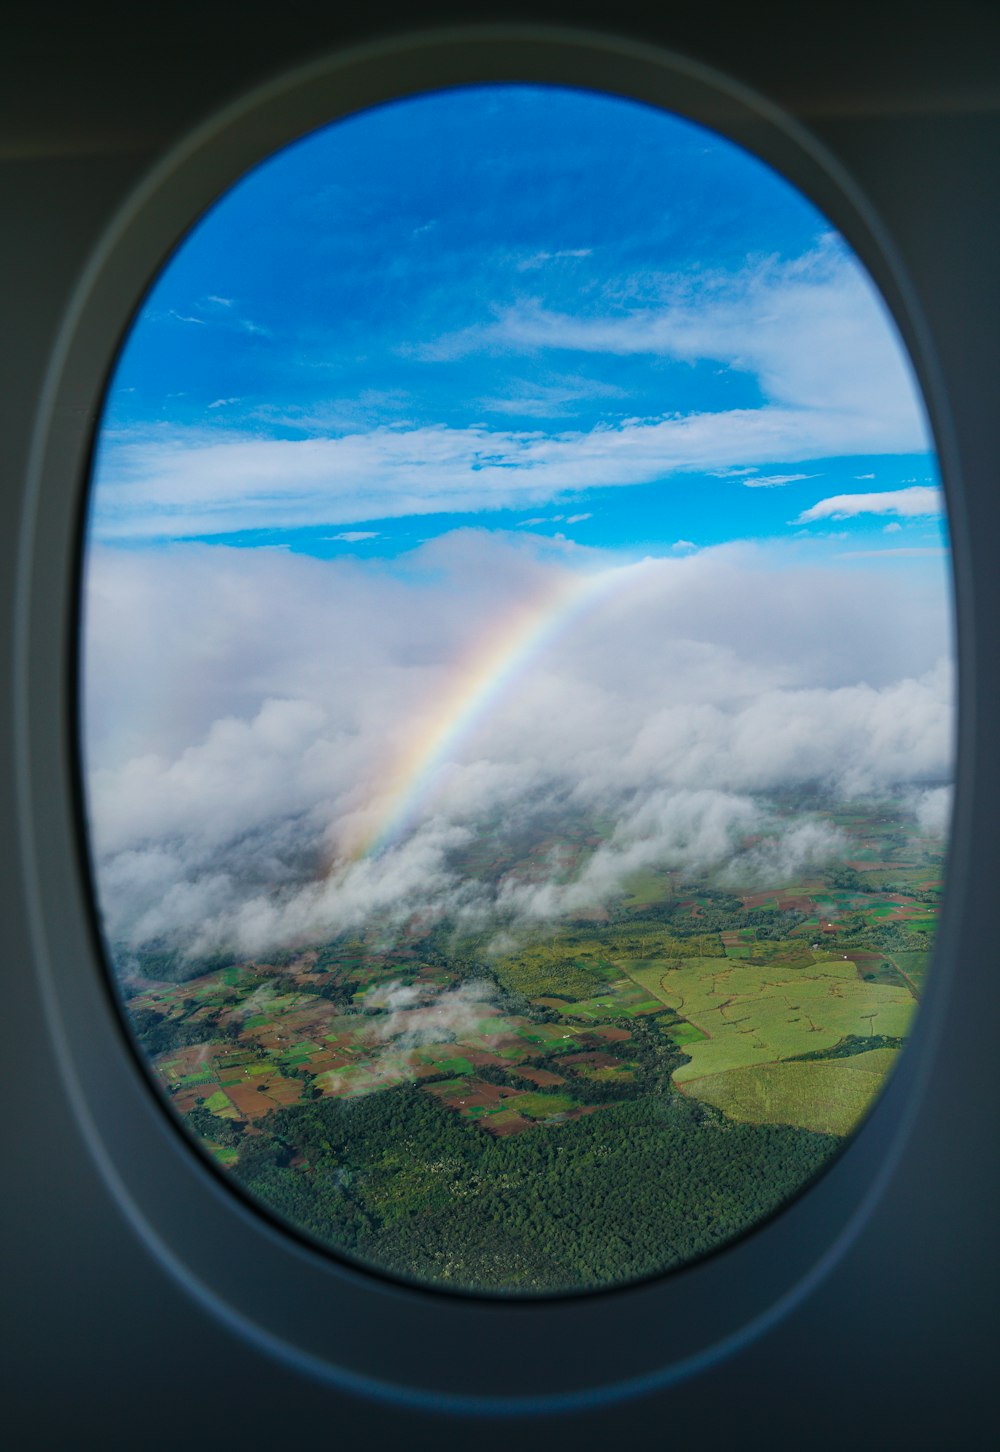 a view of a rainbow through an airplane window